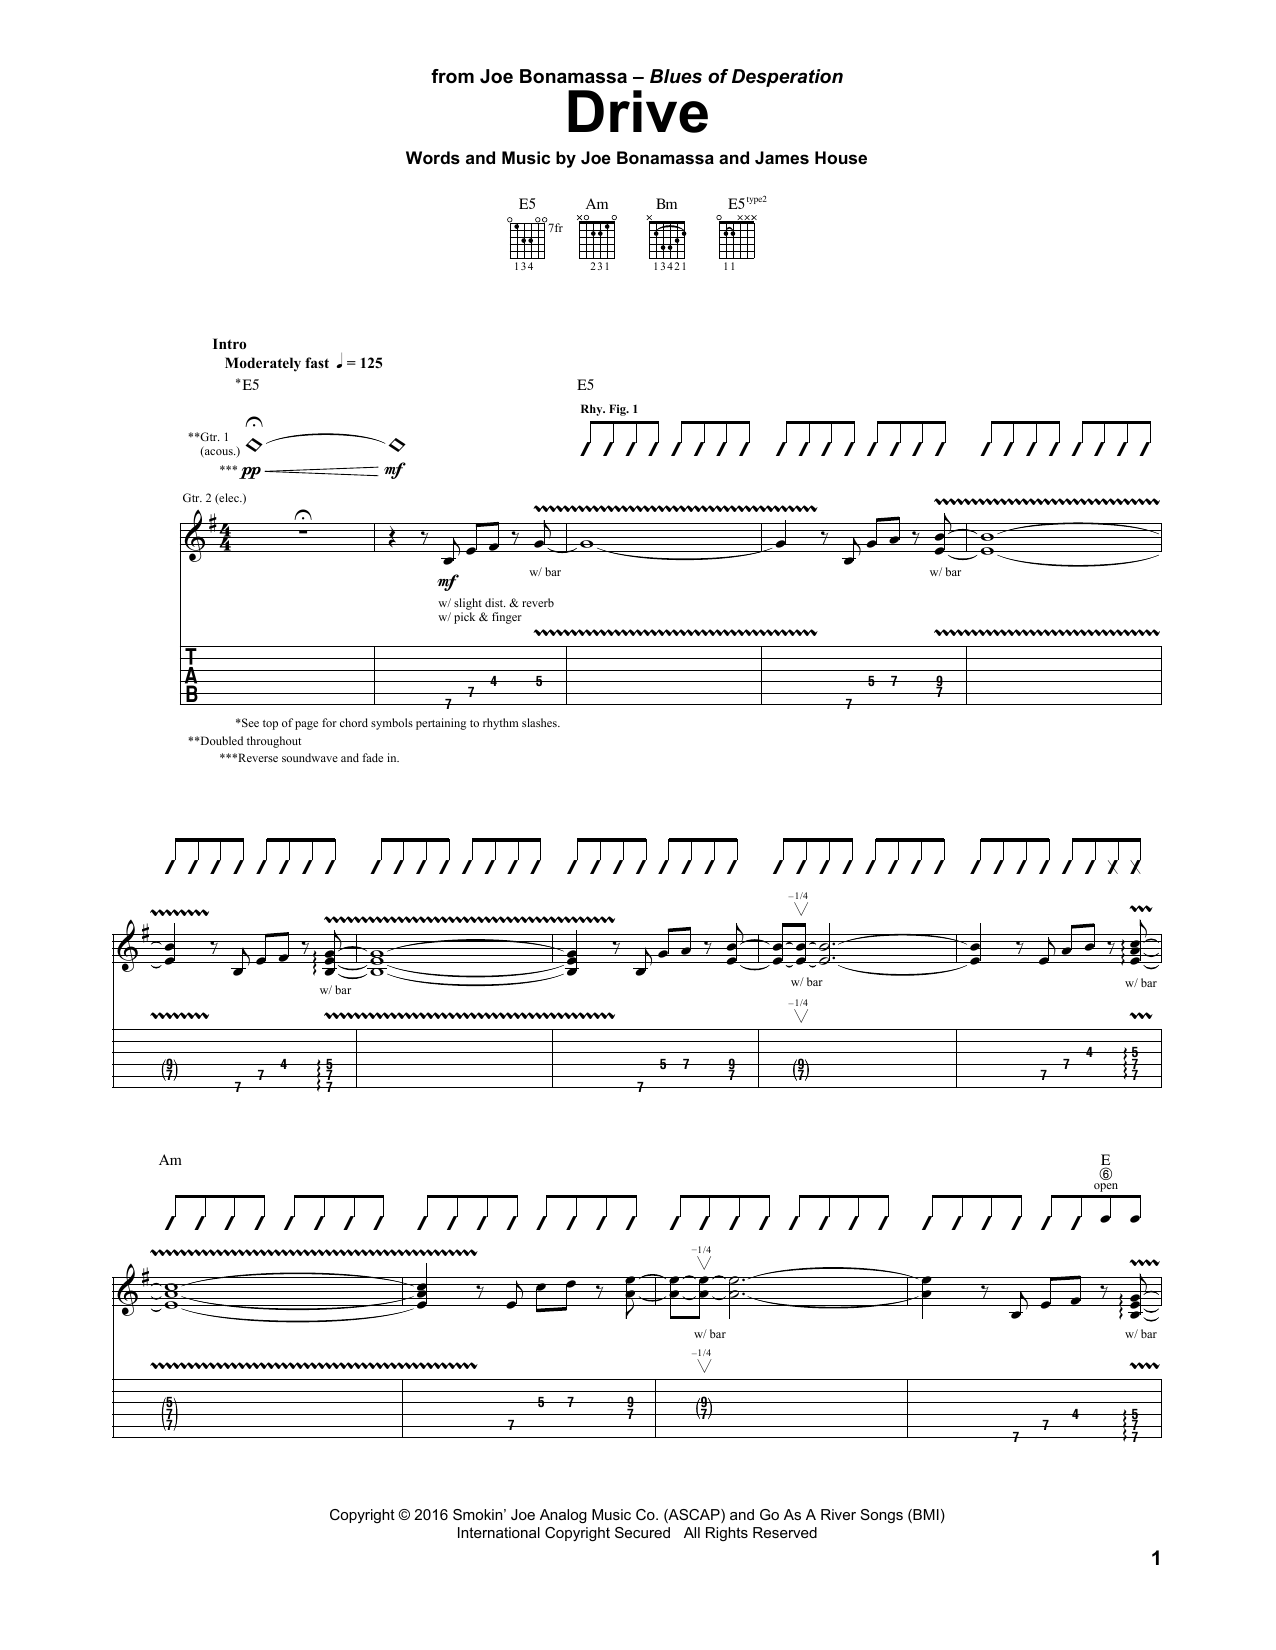 Download Joe Bonamassa Drive Sheet Music and learn how to play Guitar Tab PDF digital score in minutes